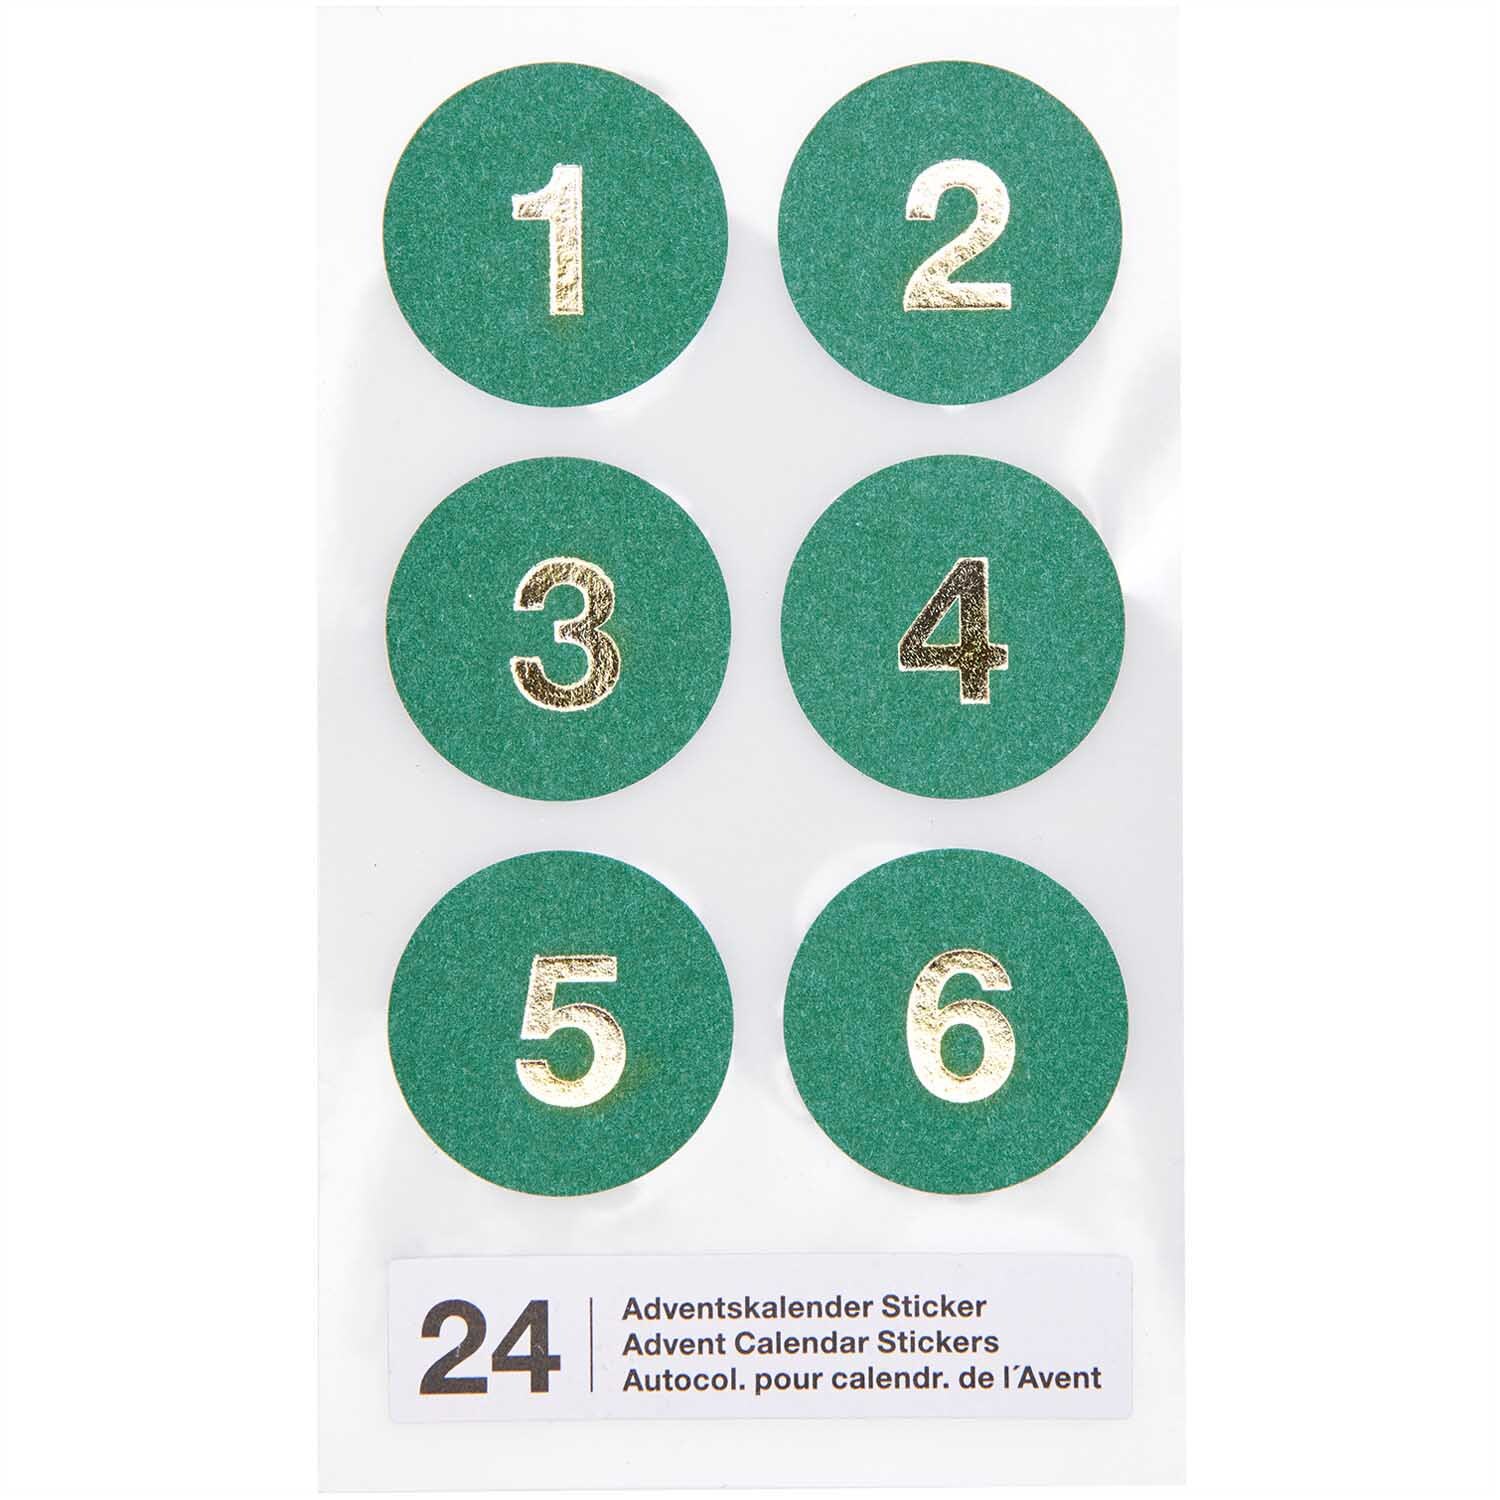 Paper Poetry Adventskalender Sticker Zahlen 1-24